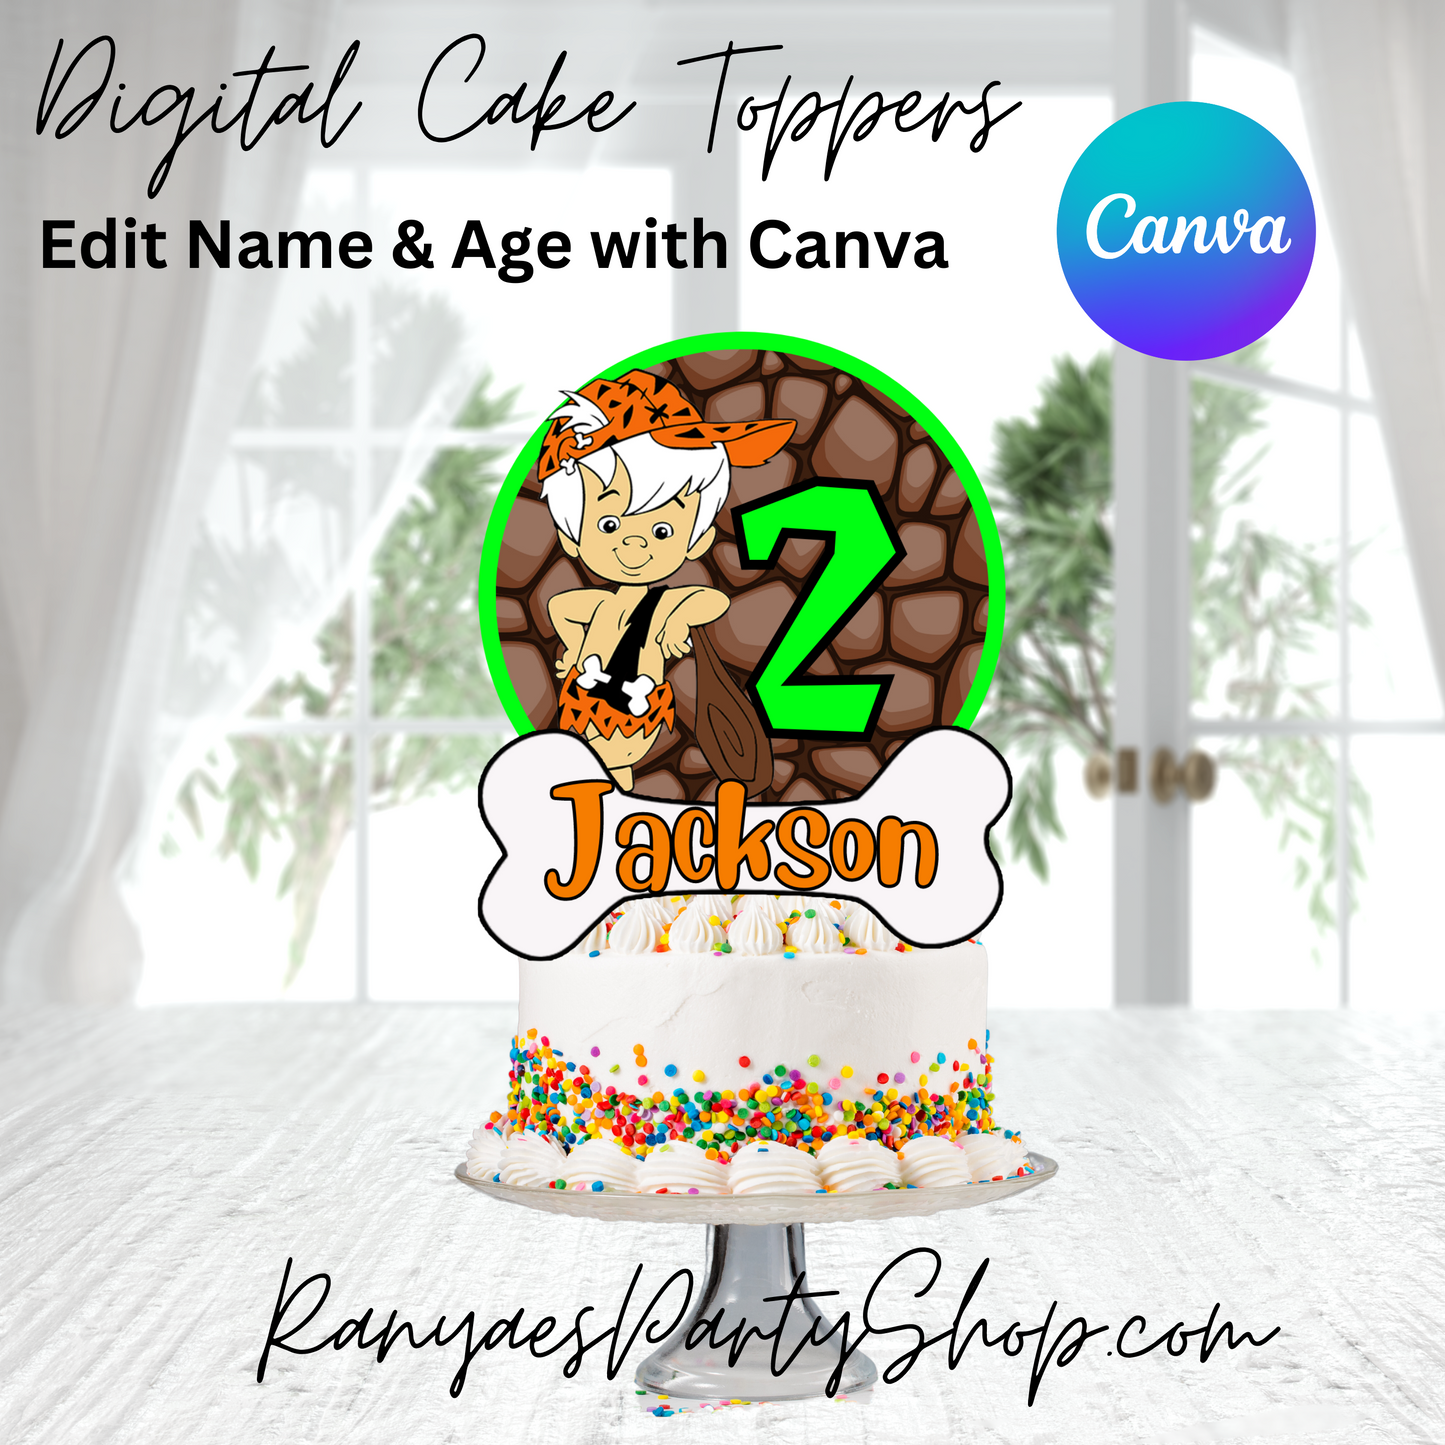 Bam Bam Digital Cake Topper | Edit Name & Age with Canva |  Cake Topper | Digital Cake Topper | Edit | Save | Download | Print